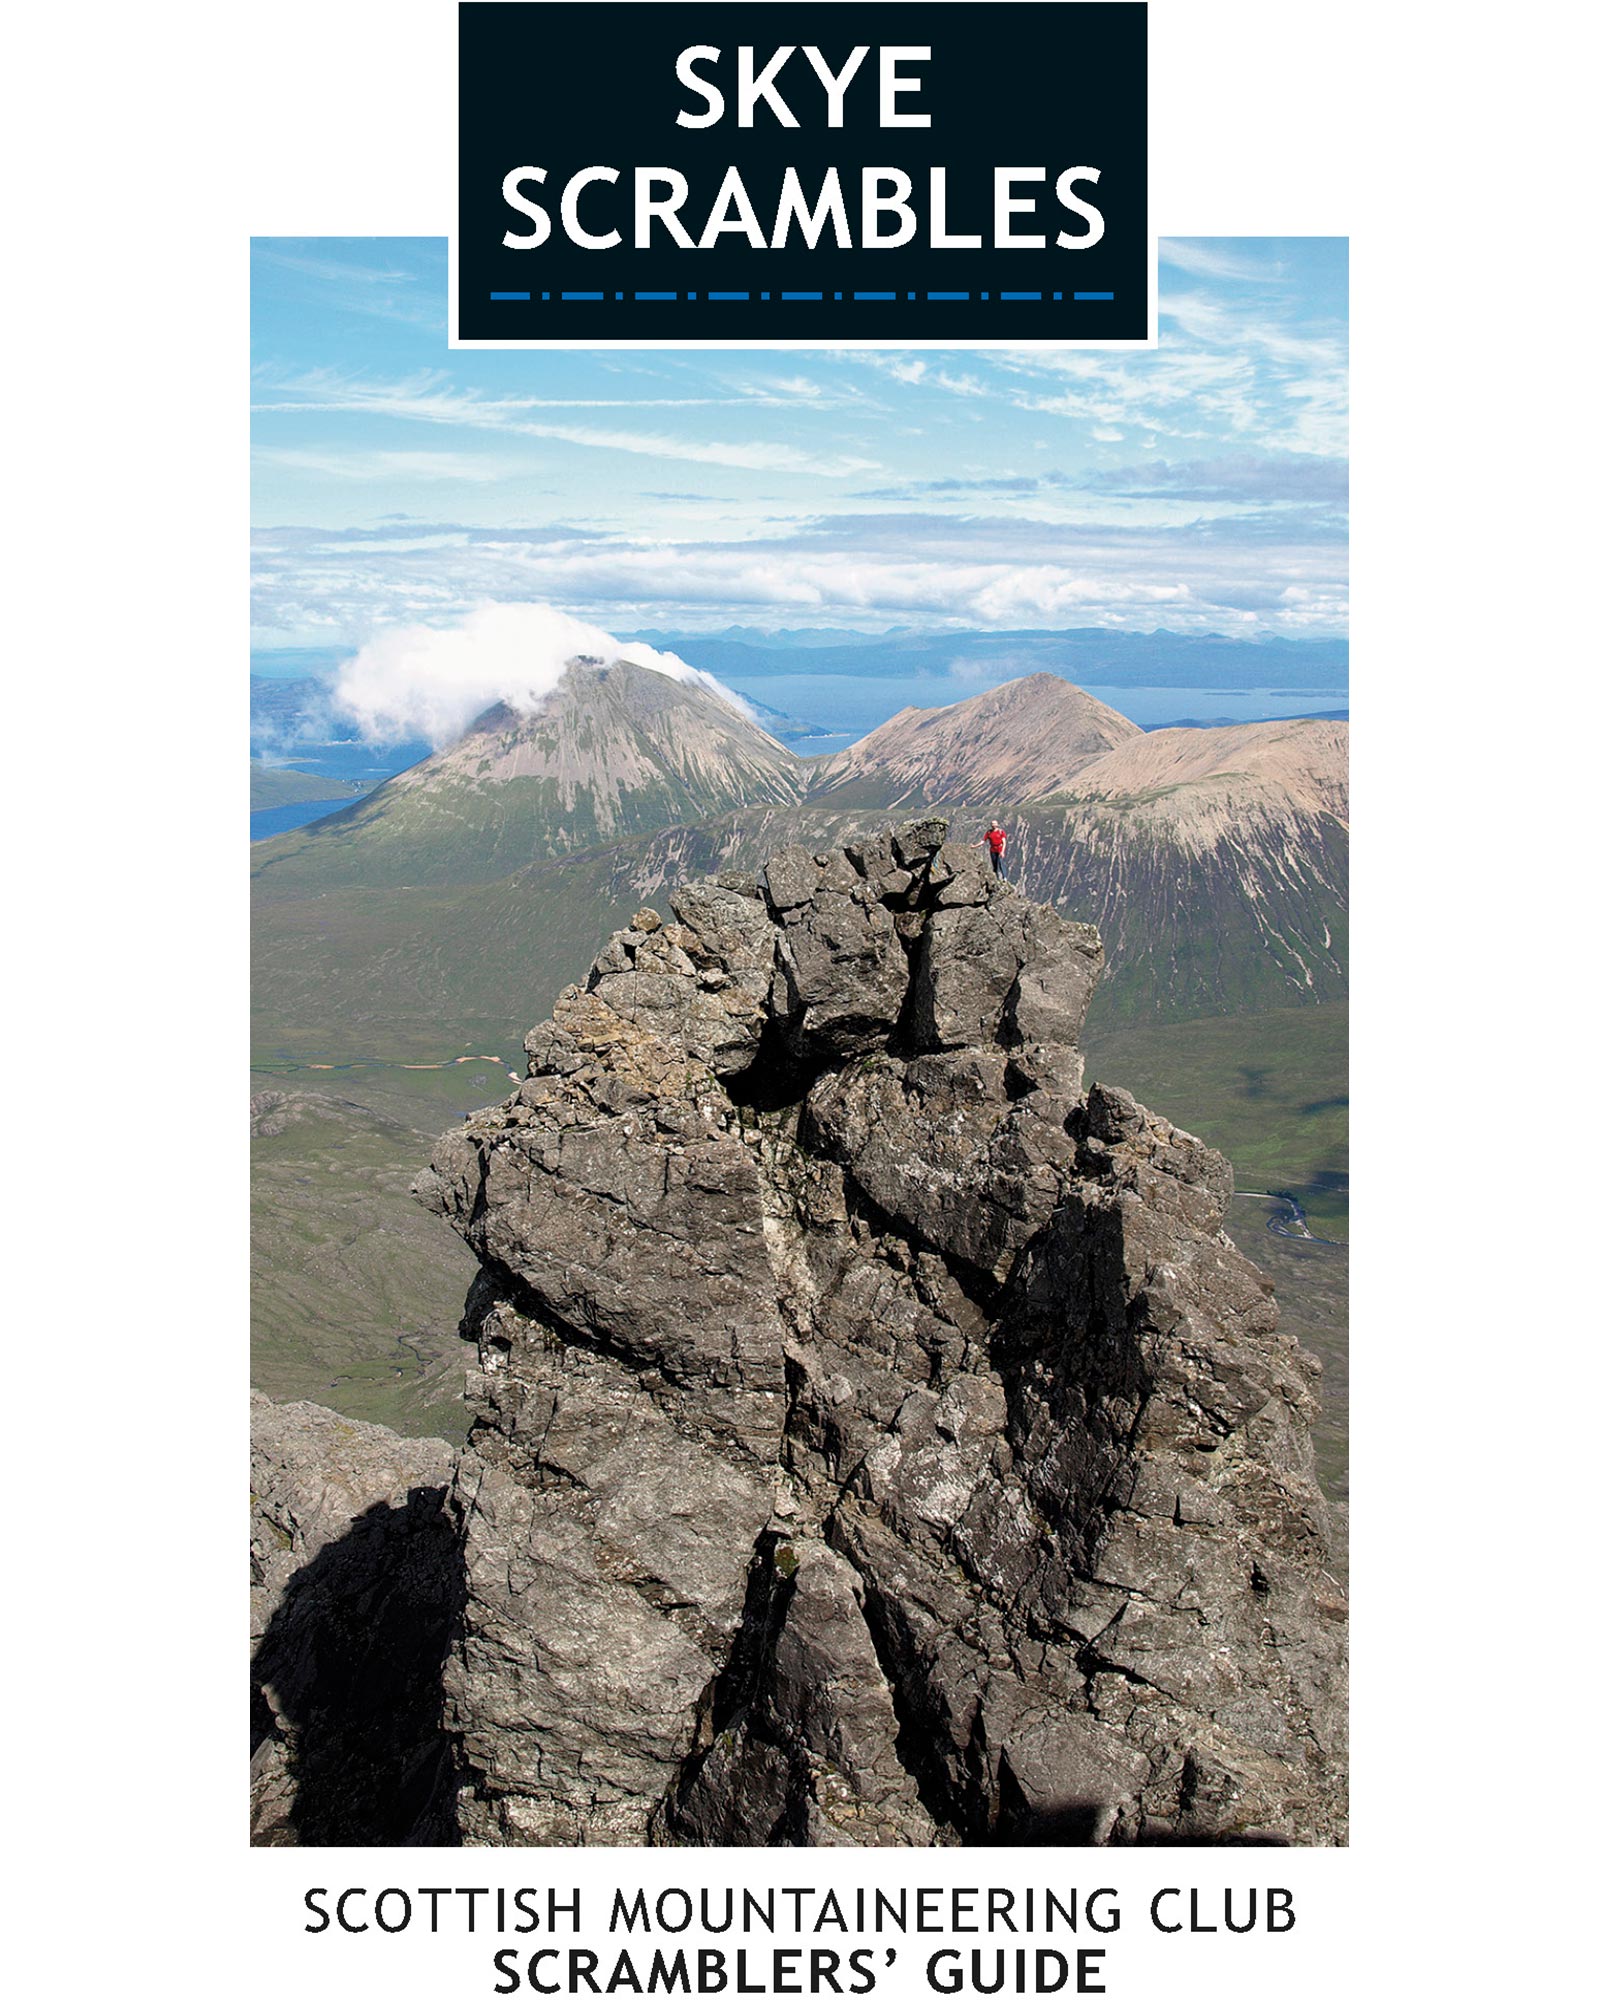 Scottish Mountaineering Club Skye Scrambles Guide Book